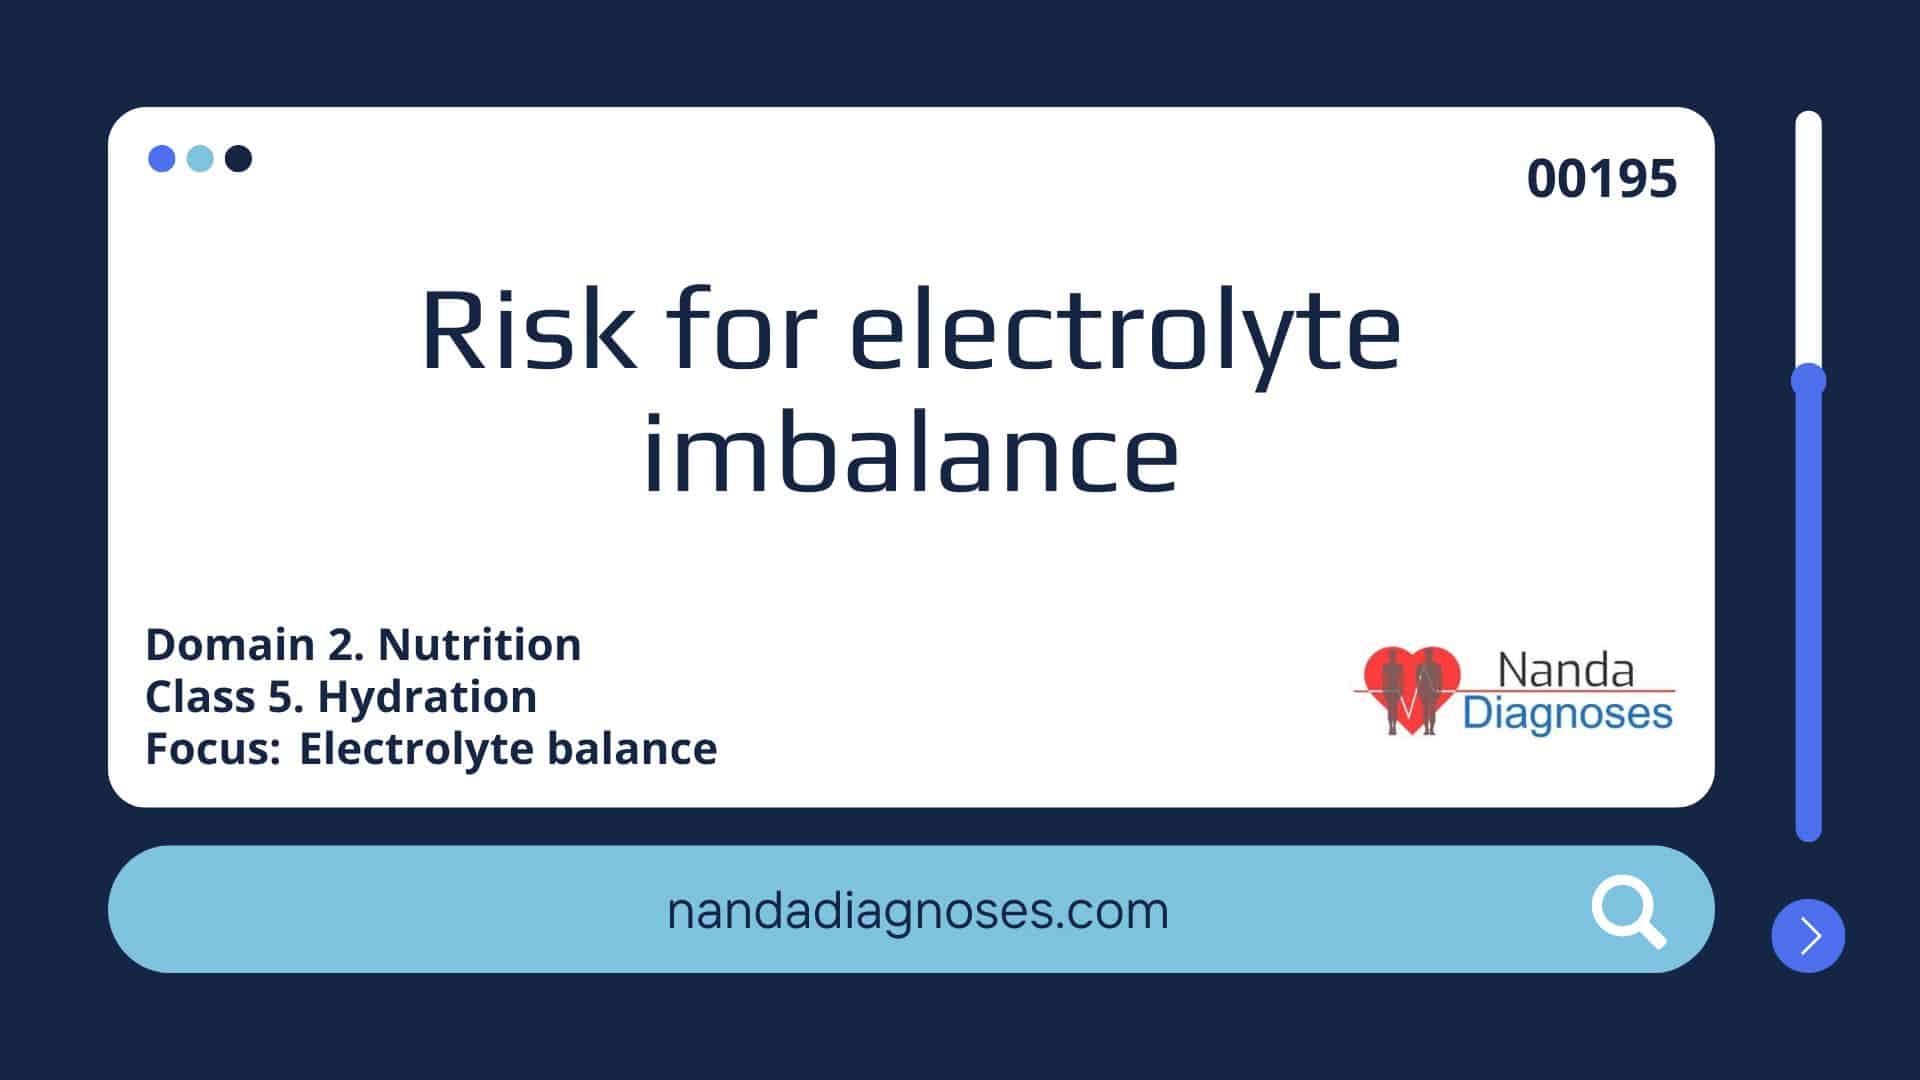 Nursing diagnosis Risk for electrolyte imbalance